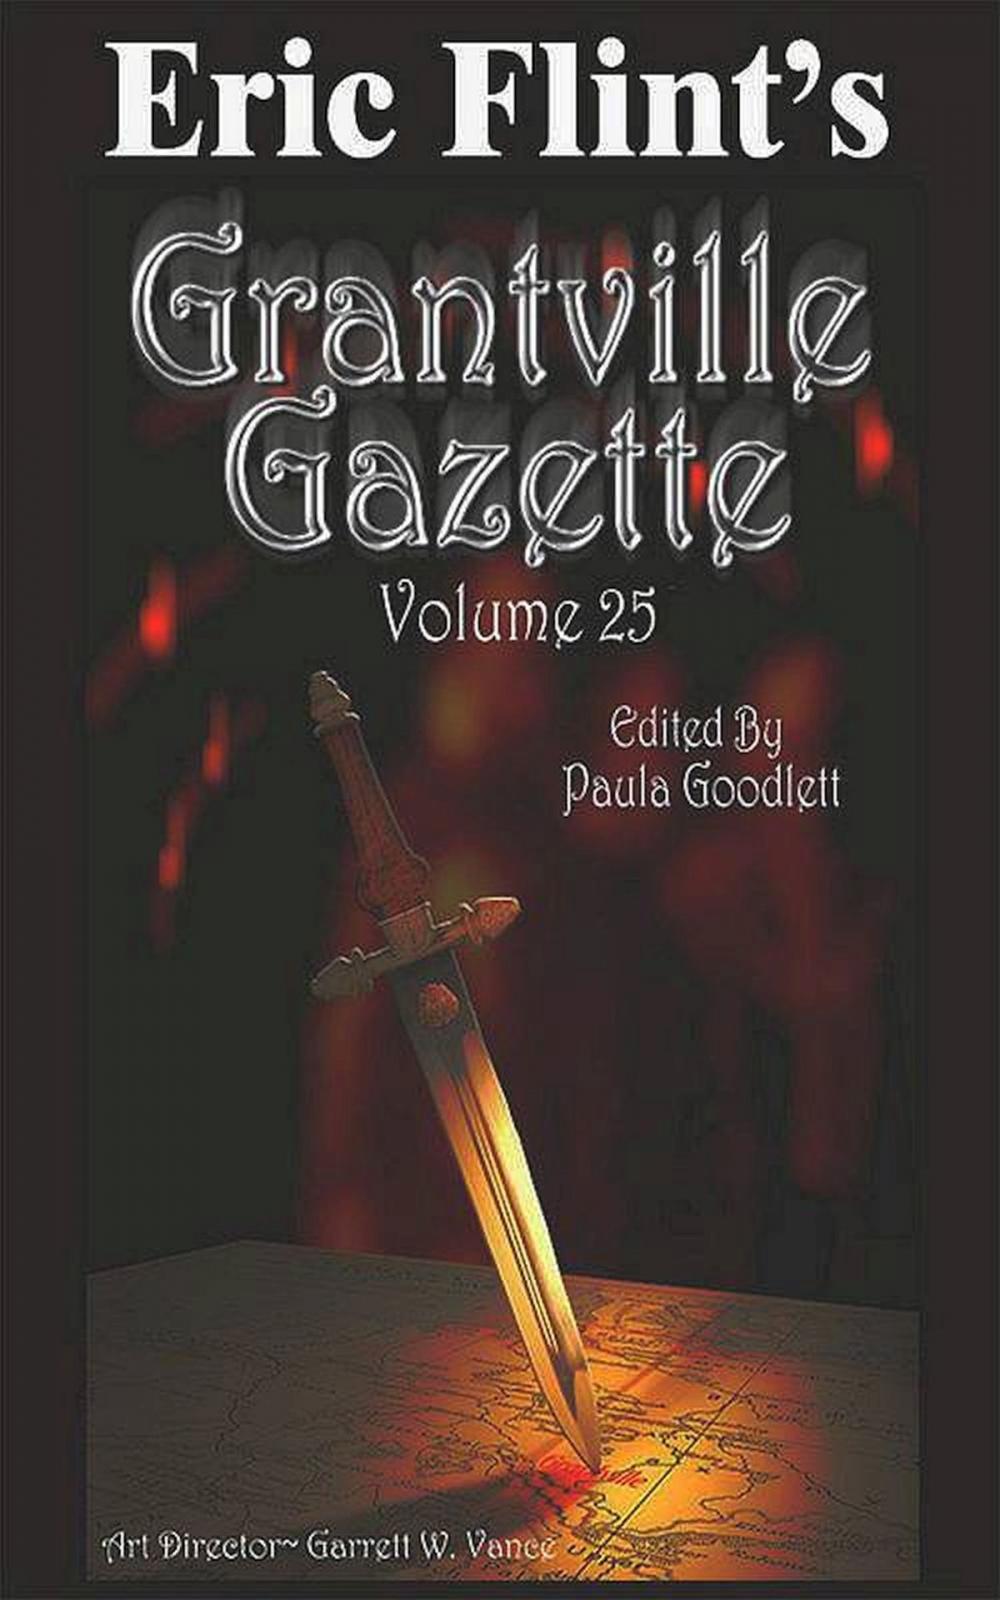 Big bigCover of Eric Flint's Grantville Gazette Volume 25